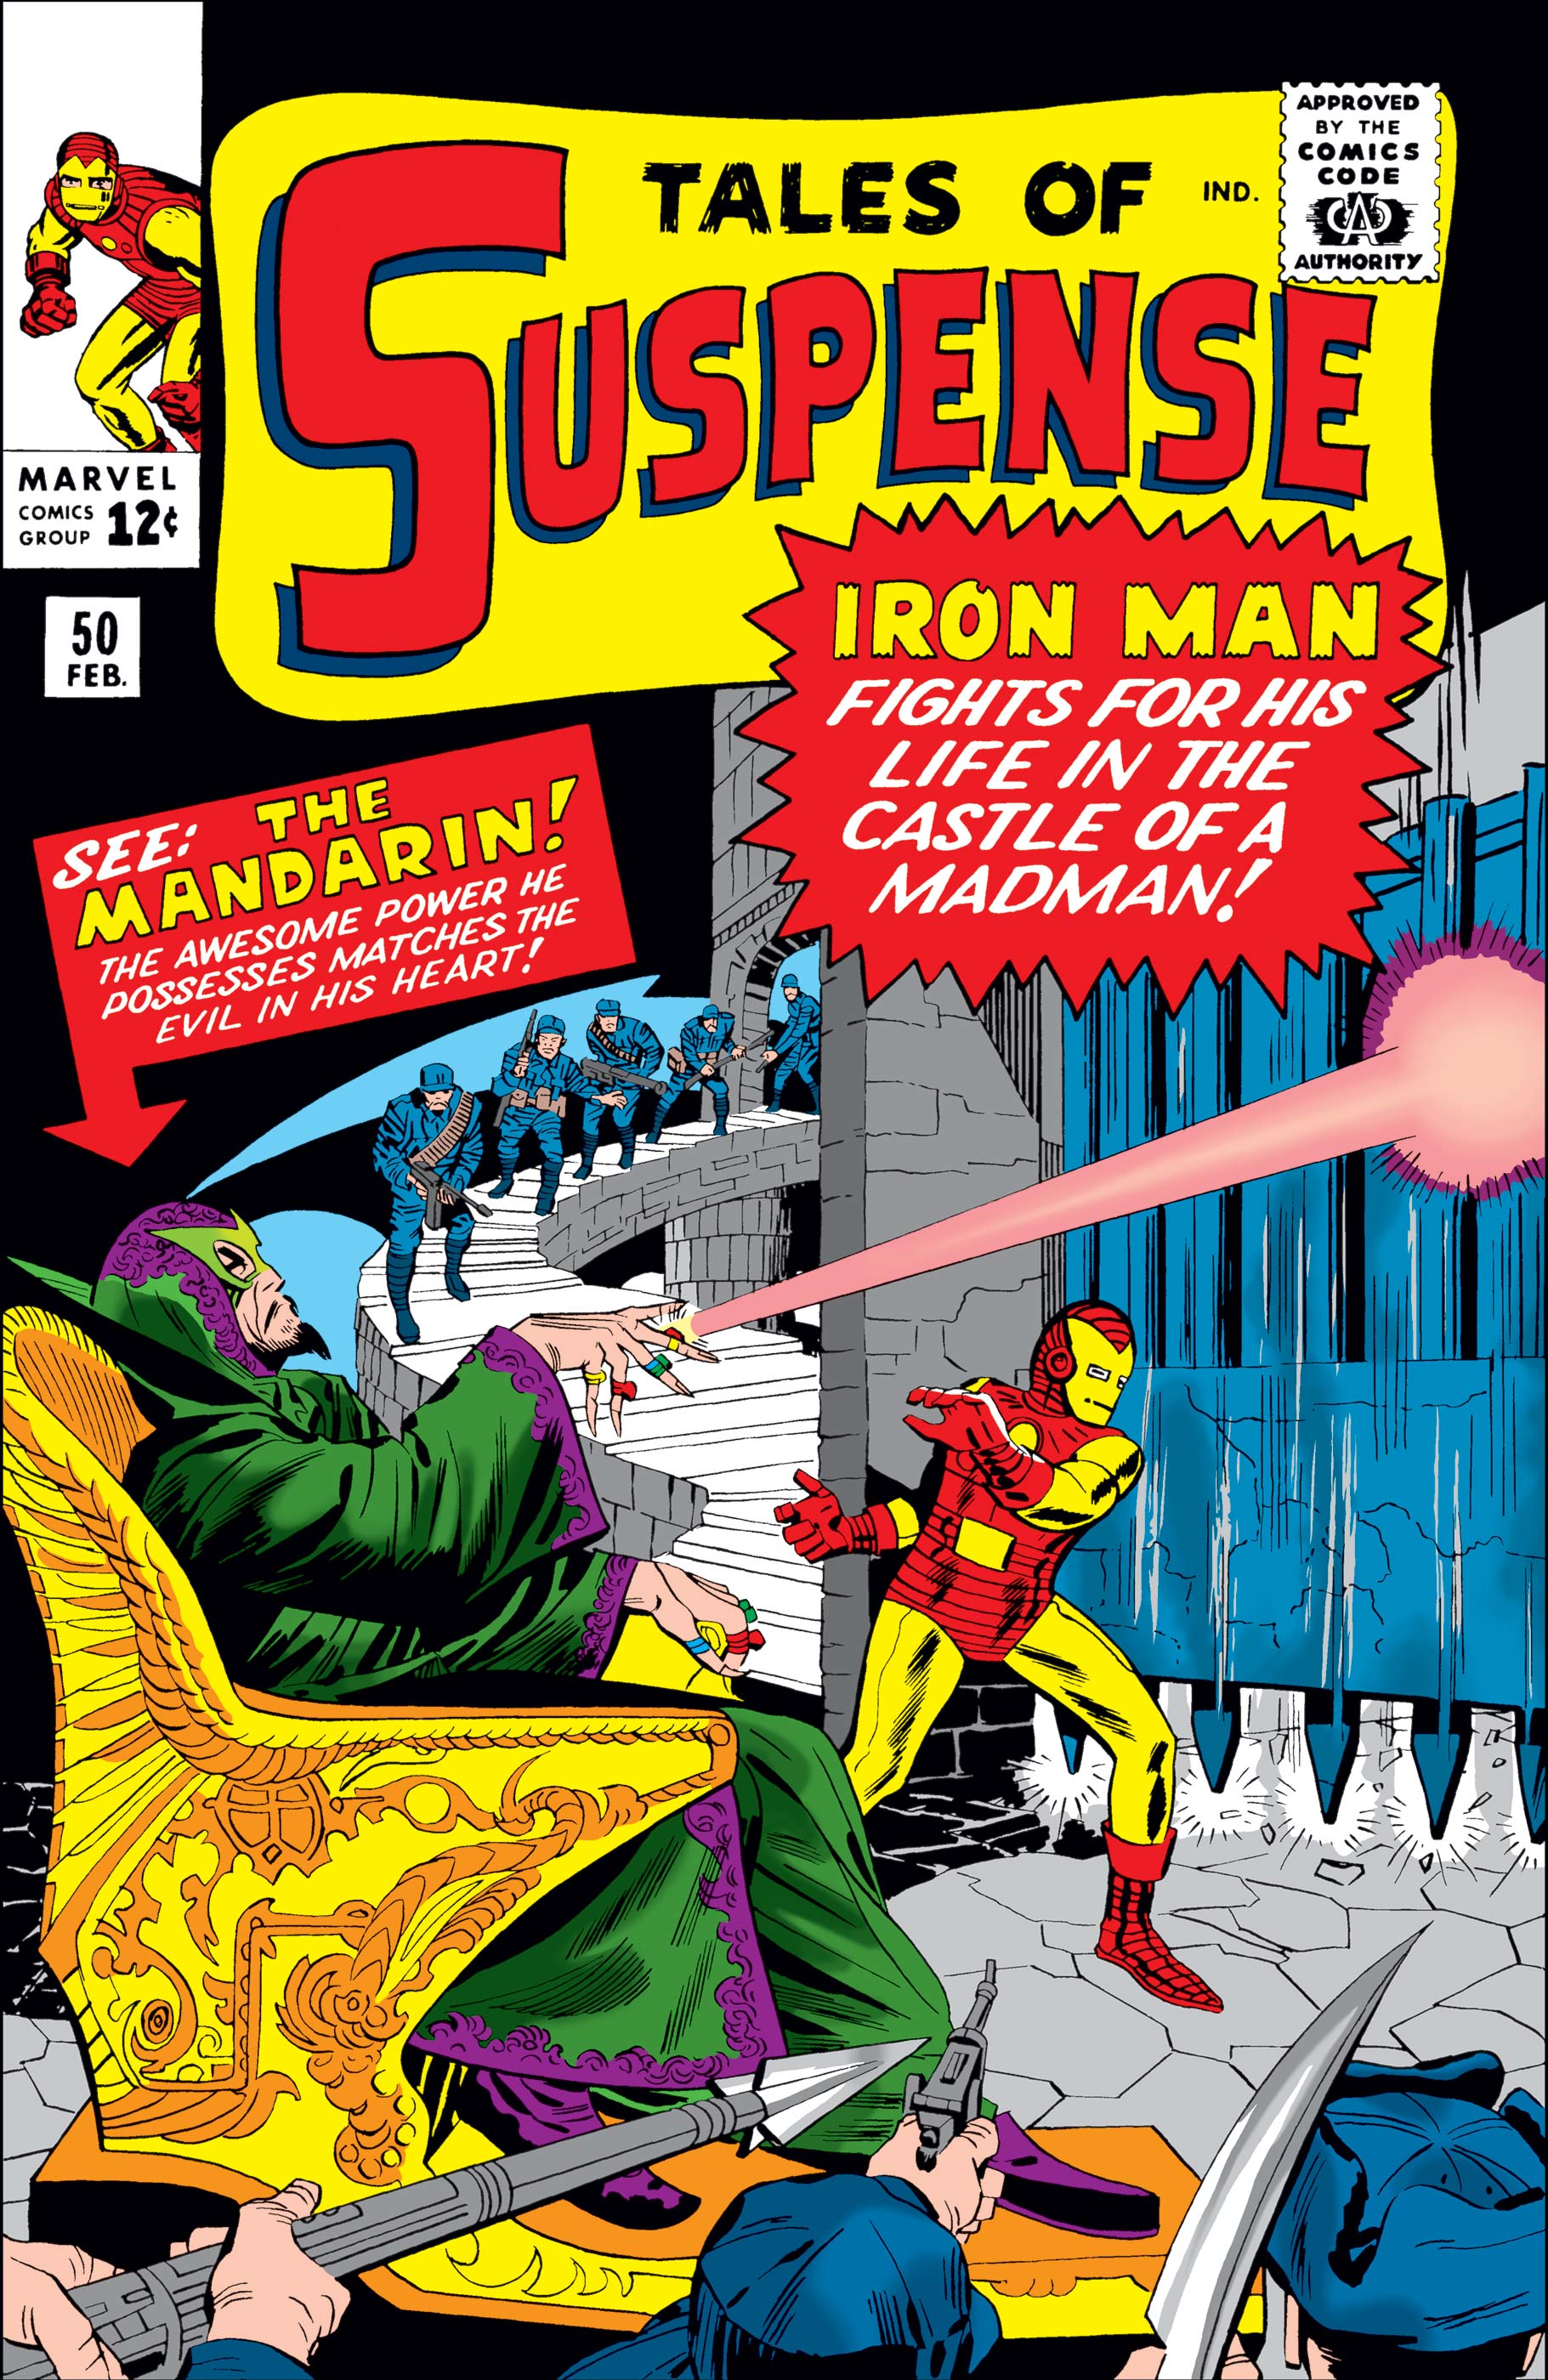 1964年的《Tales of Suspense》#50封面